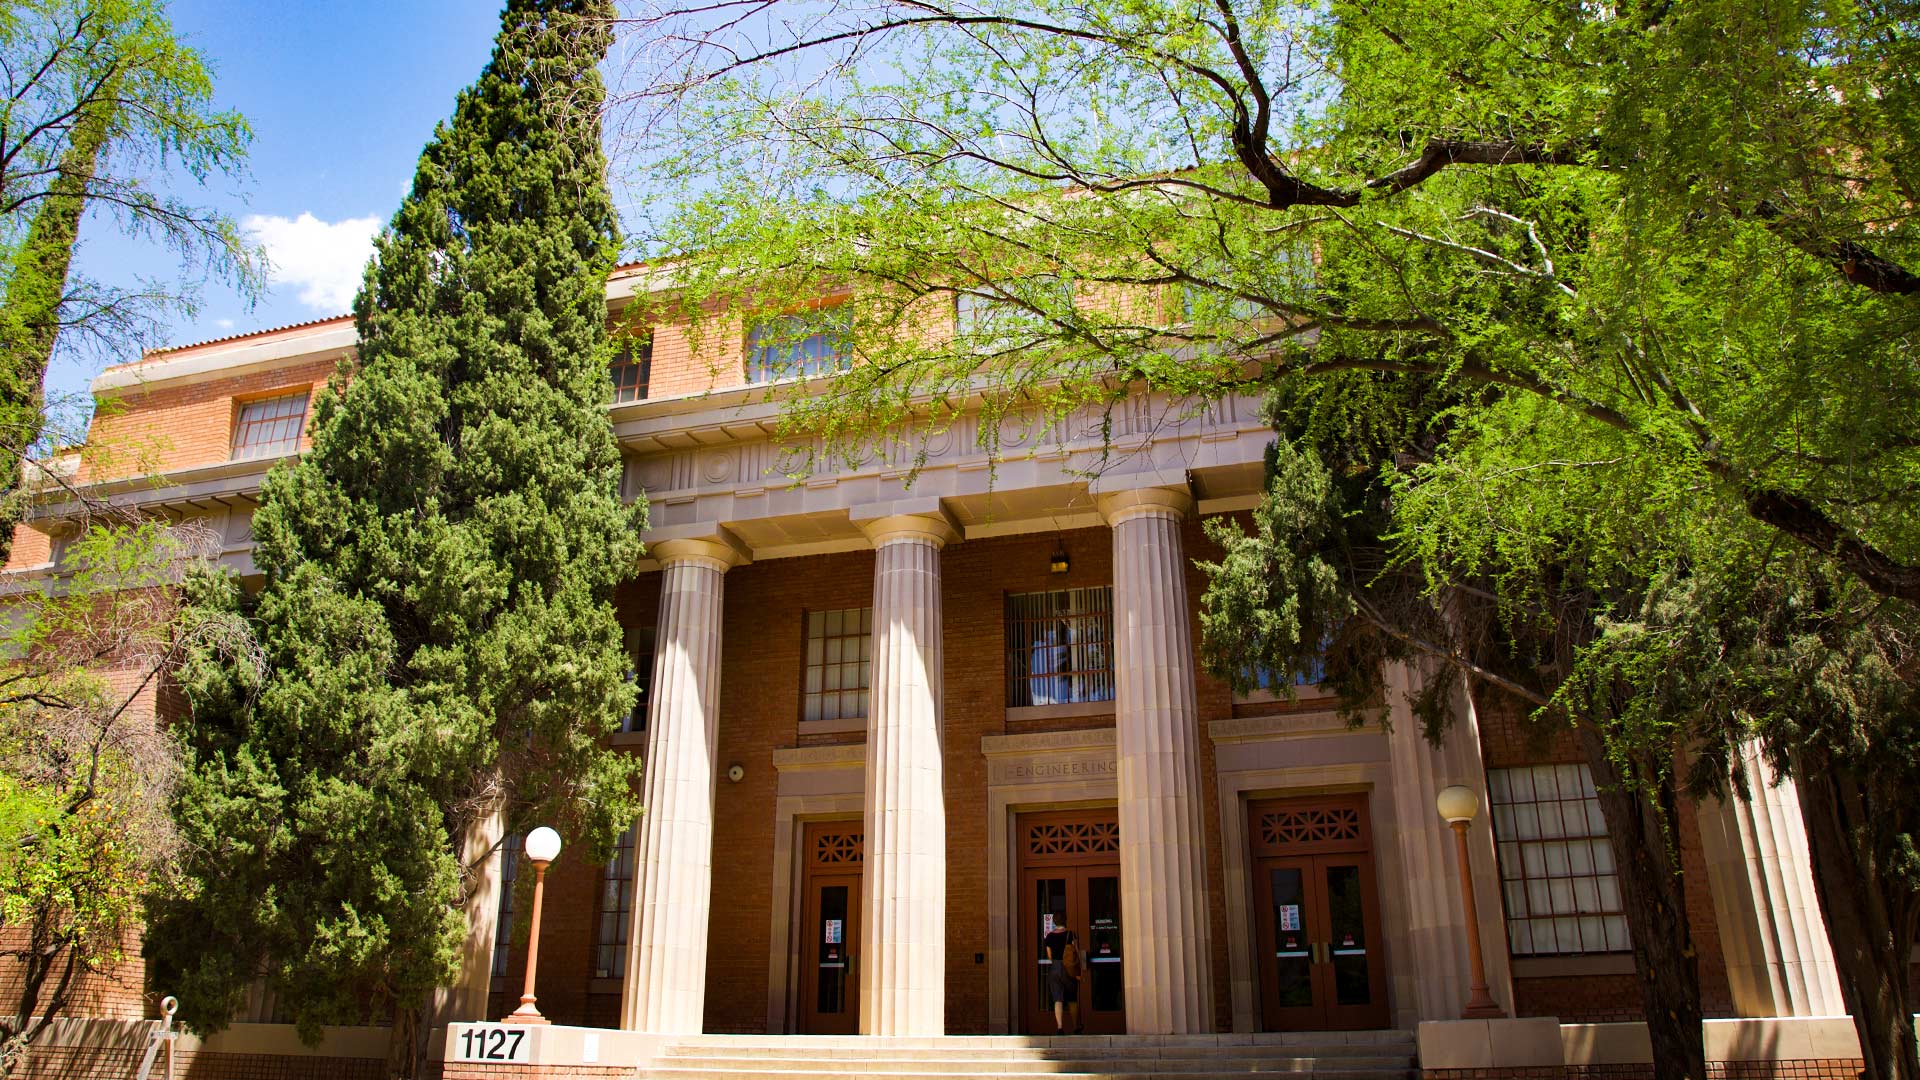 The Engineering Building on the University of Arizona campus. 